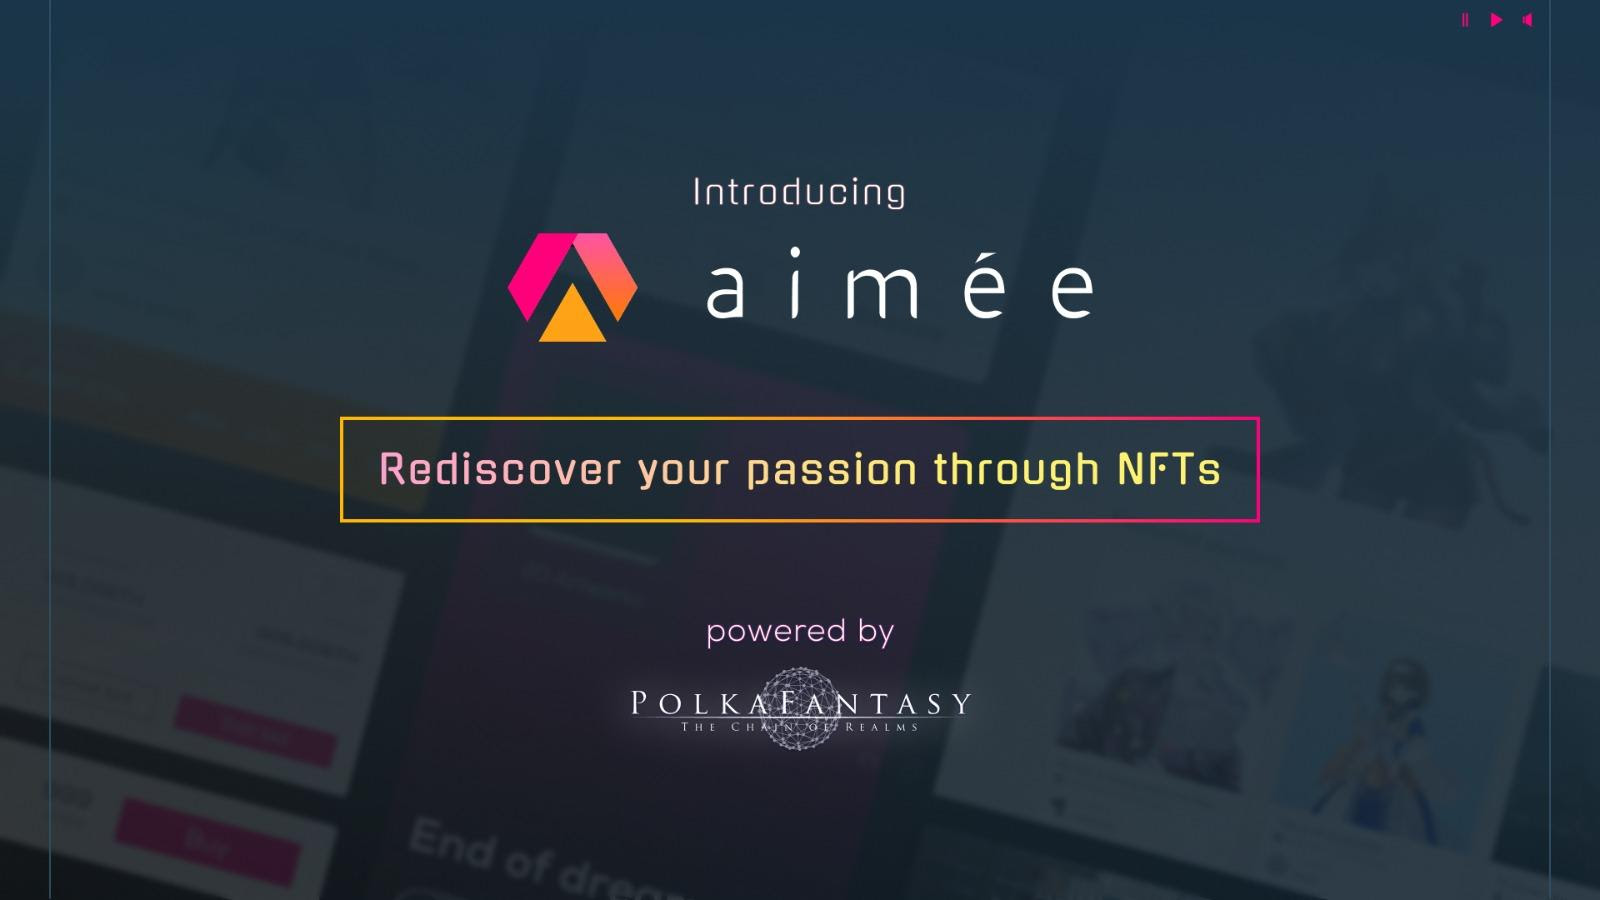 PolkaFantasy Launches rebranded aimée NFT marketplace